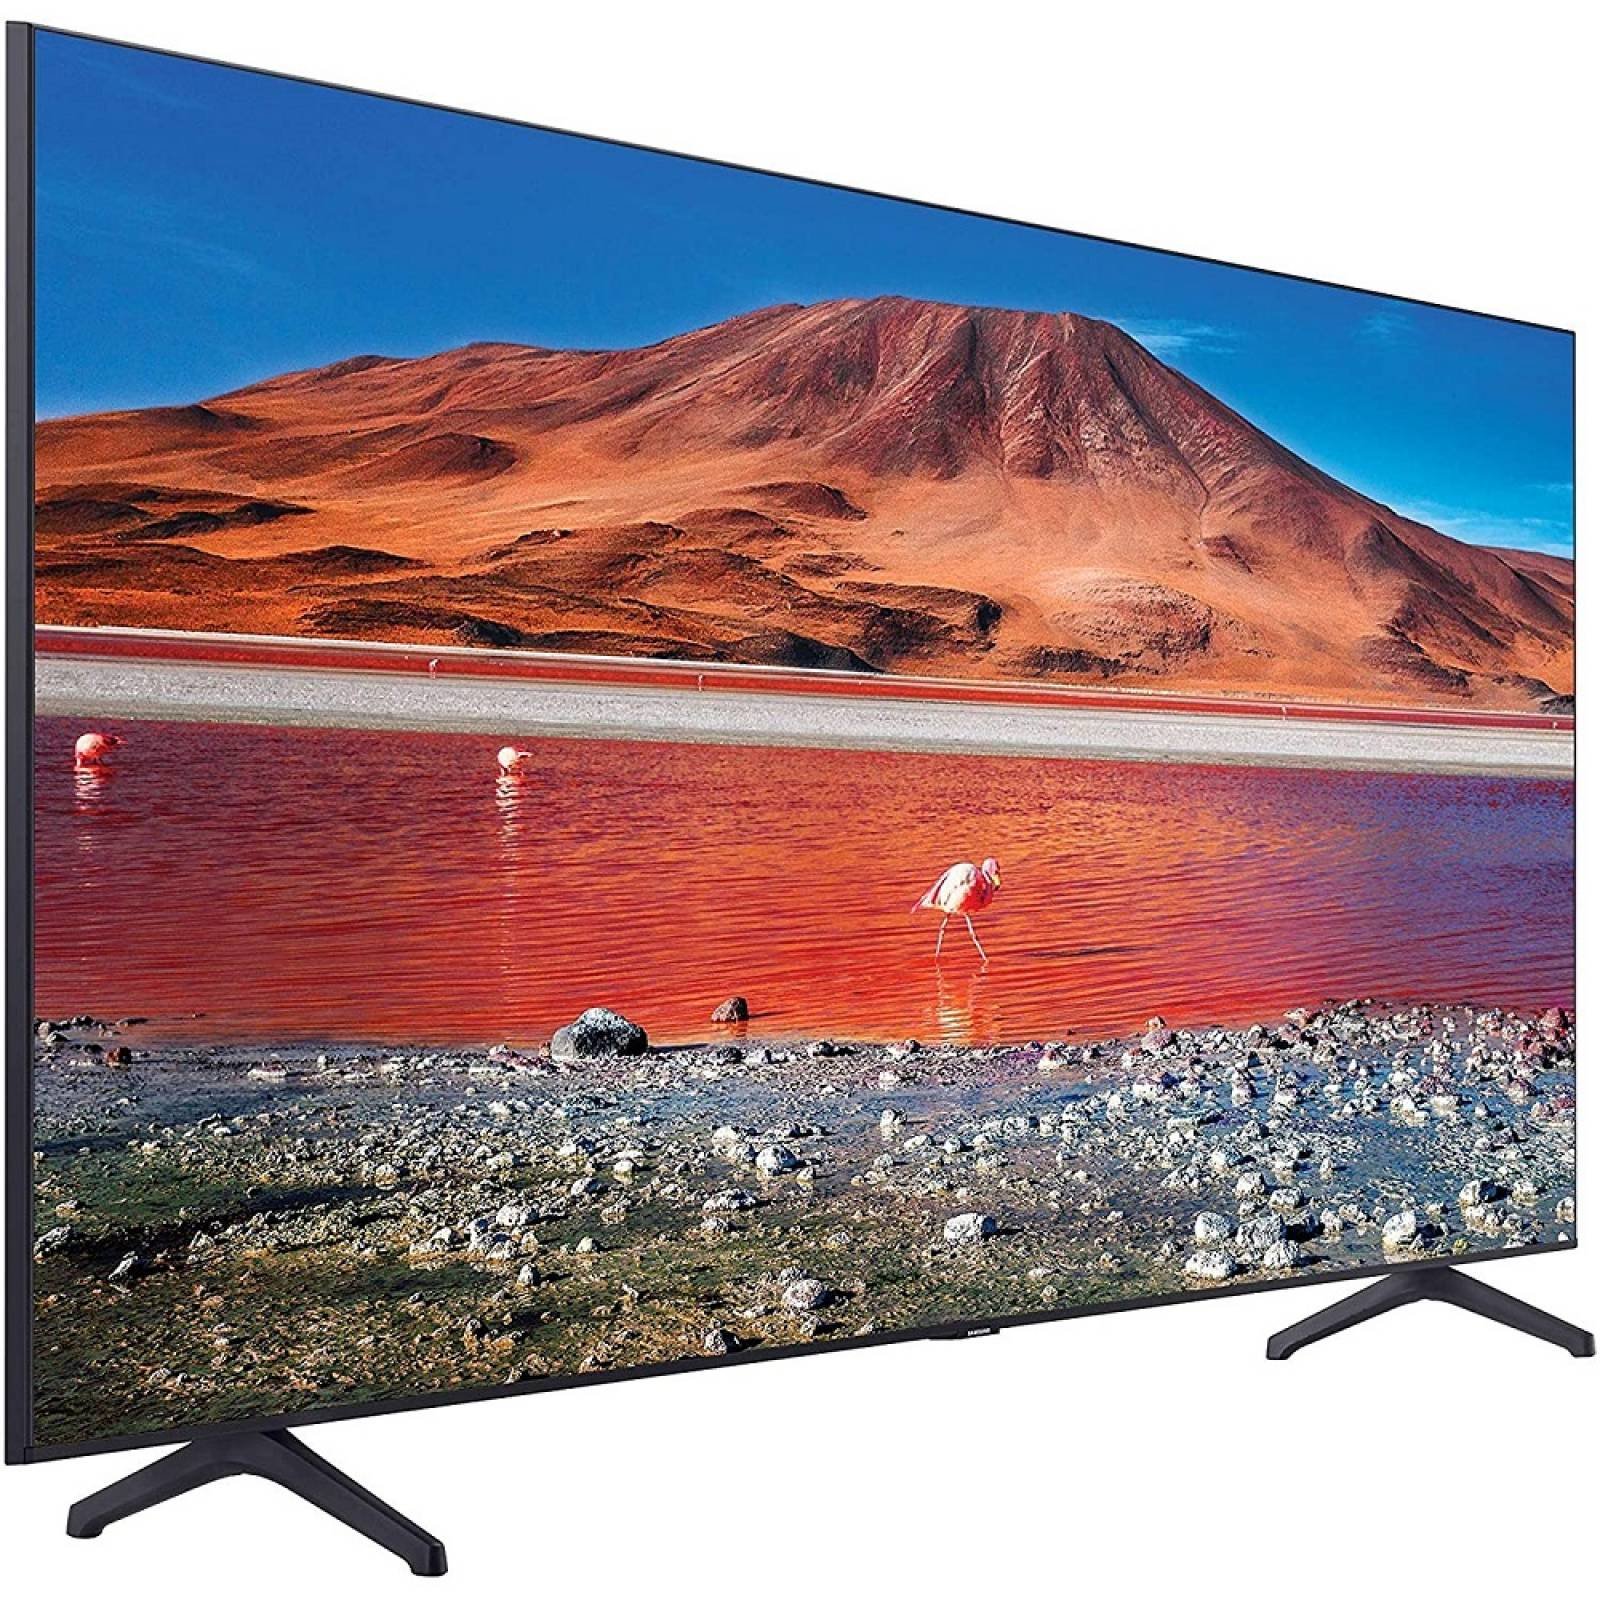 Smart TV Samsung 55 4K HDR10 Engine Crystal UN55TU7000